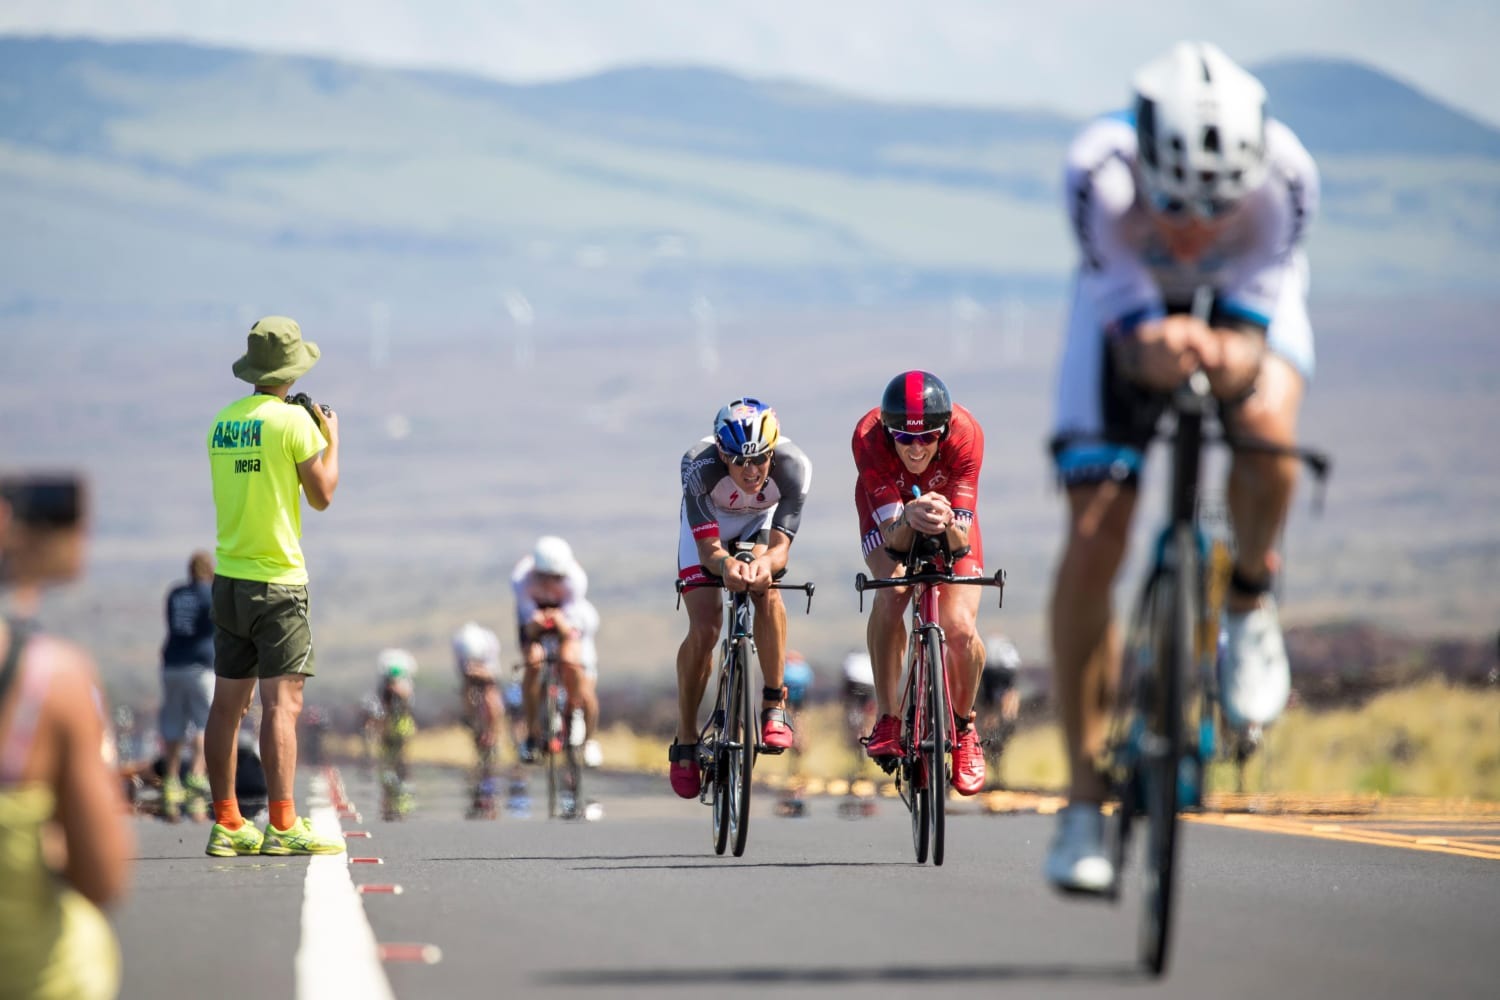 When Is The Ironman Triathlon Held In Hawaii